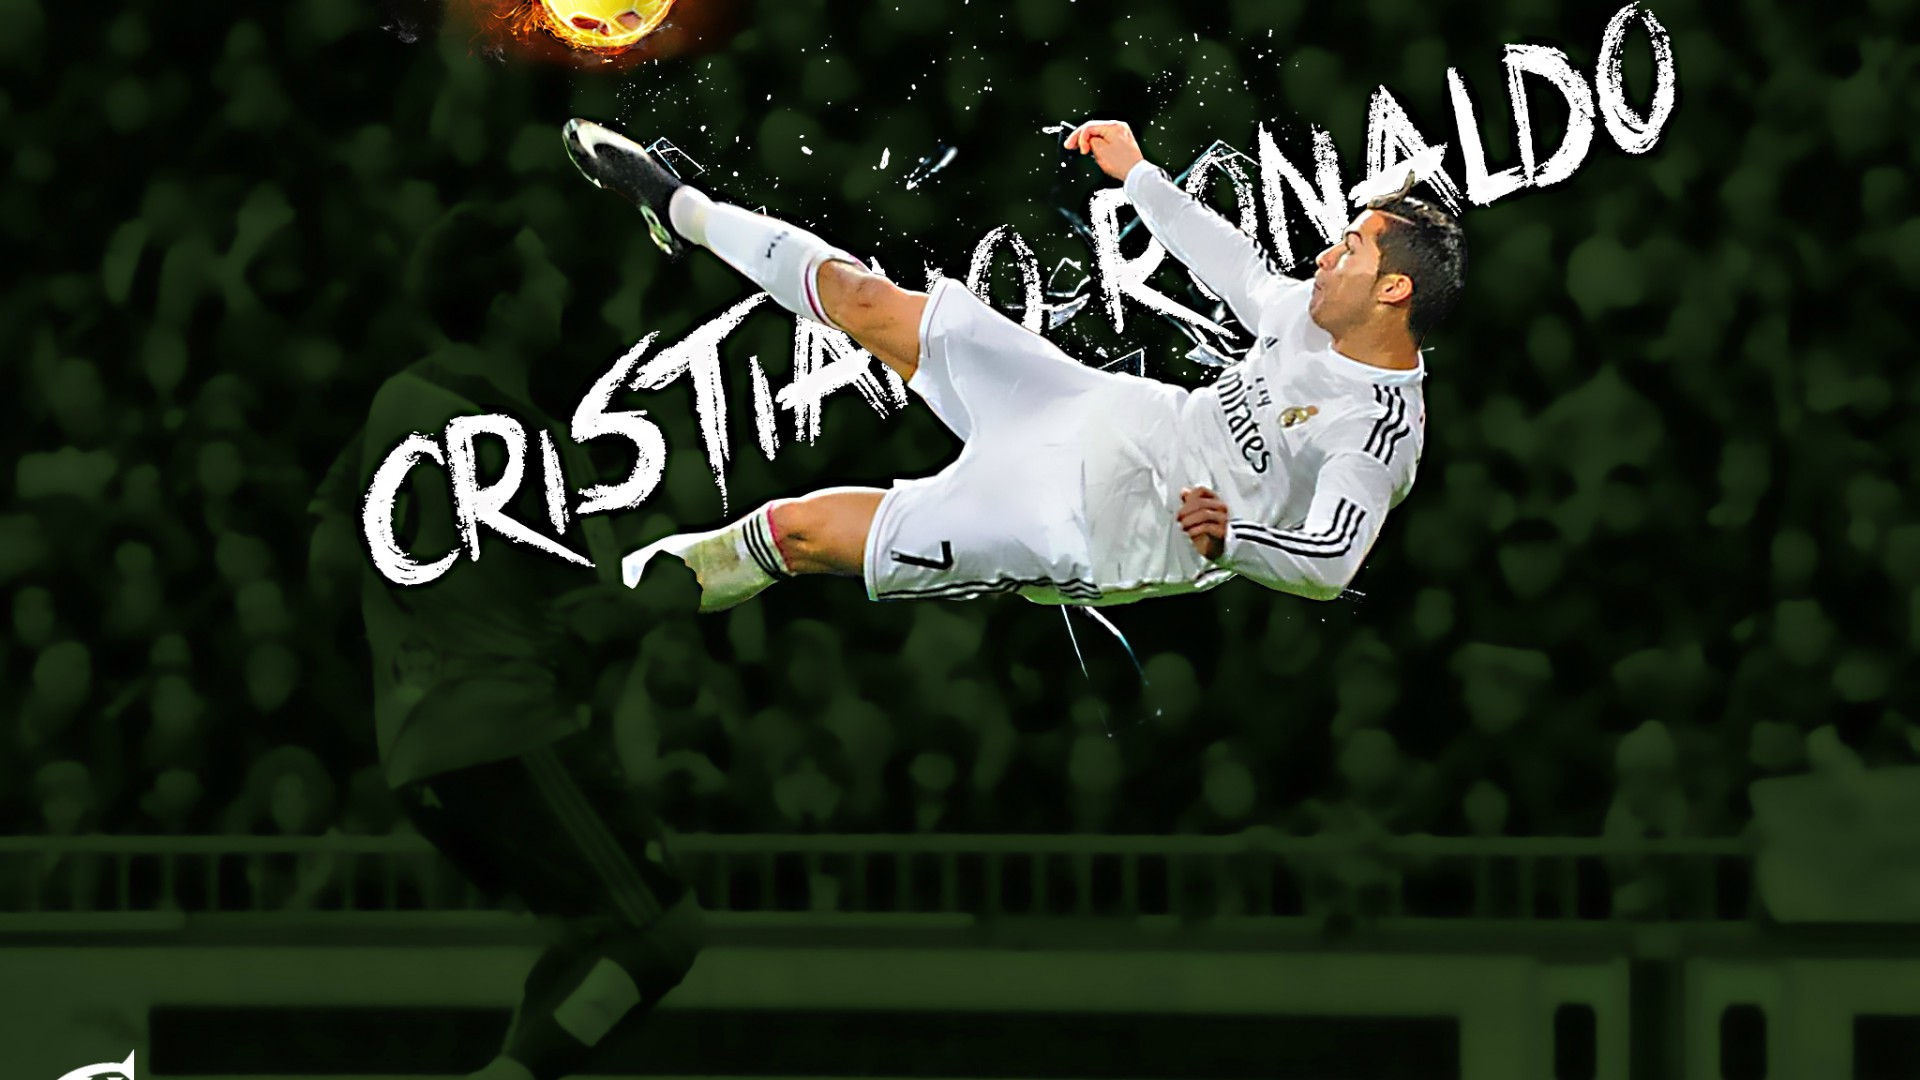 Cristiano Ronaldo Wallpaper 1080p 74 images